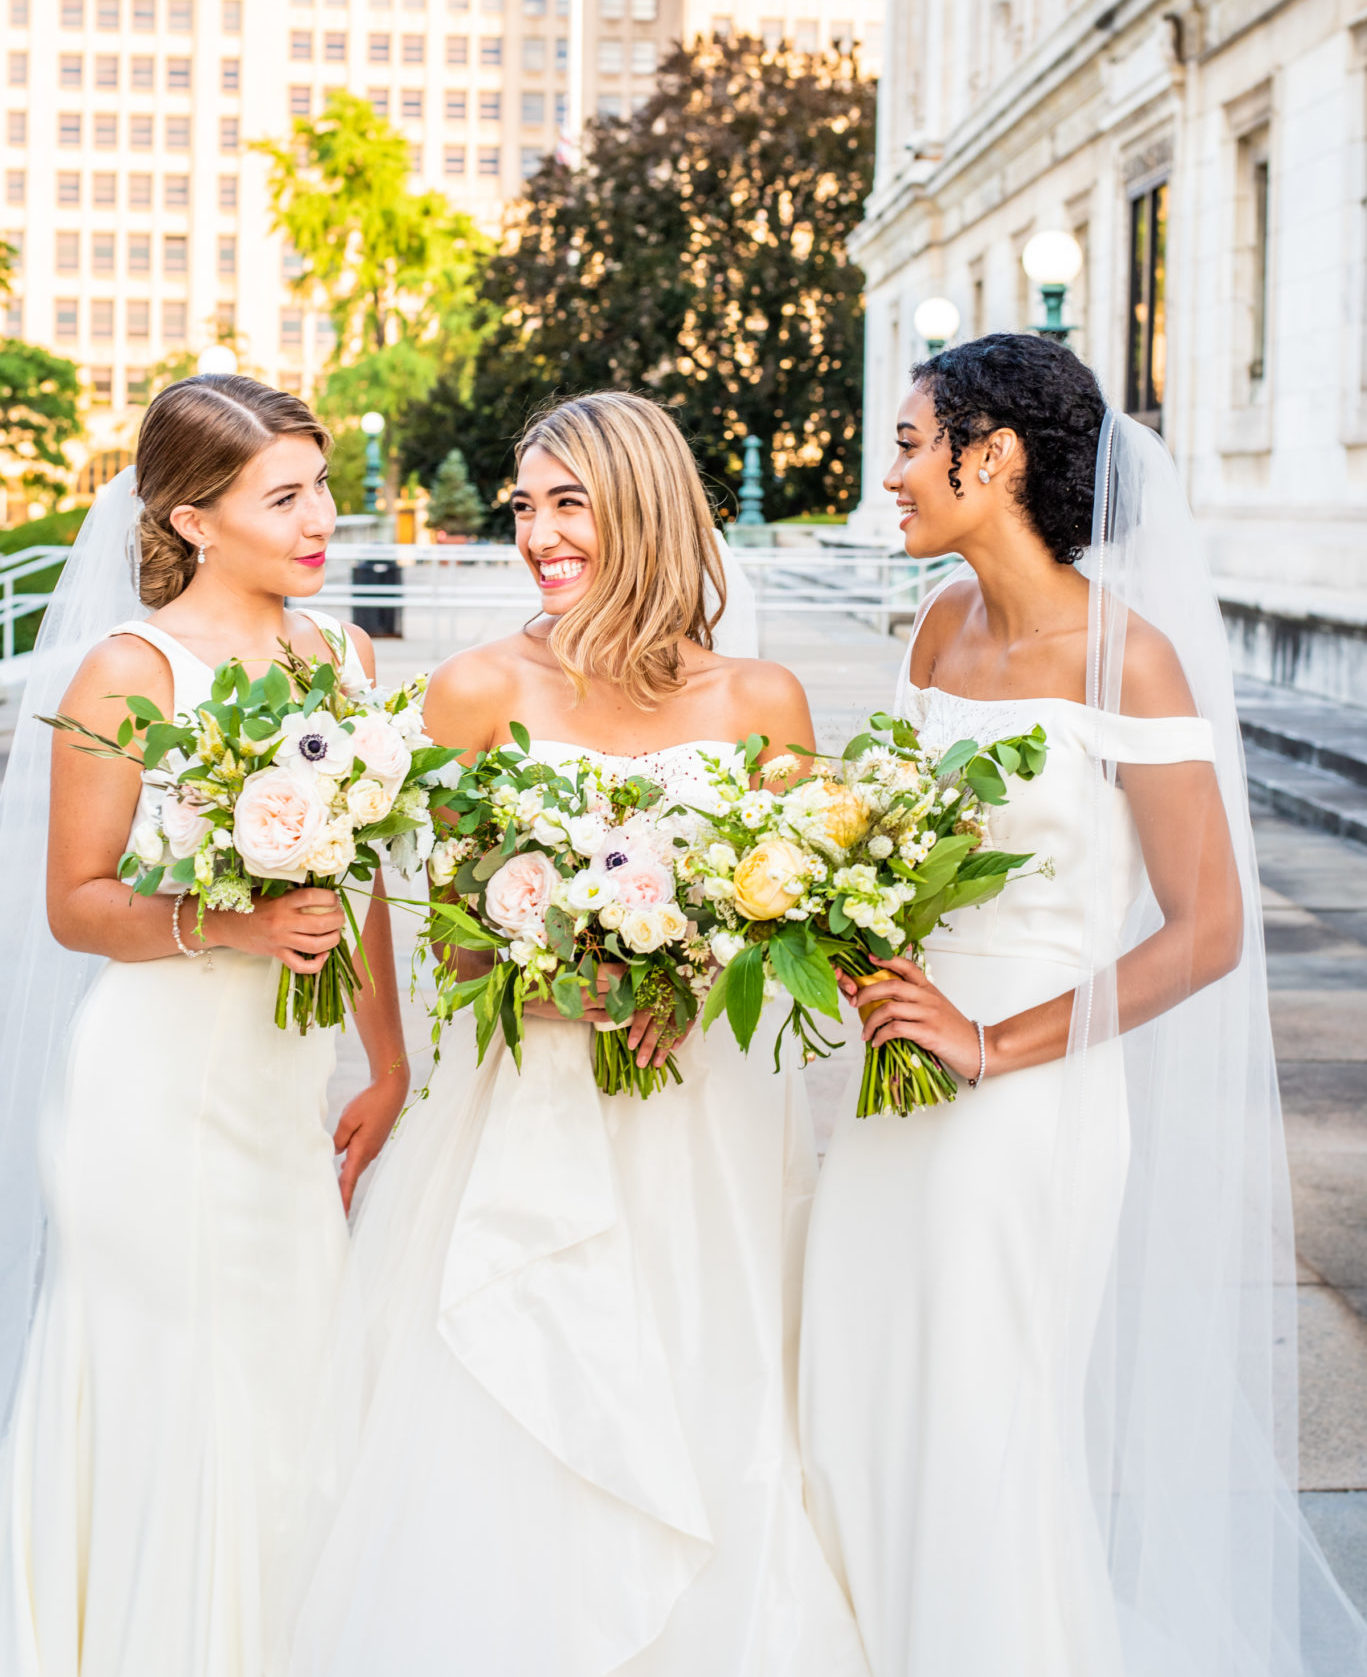 three cheerful women in bridal gowns in metropolitan